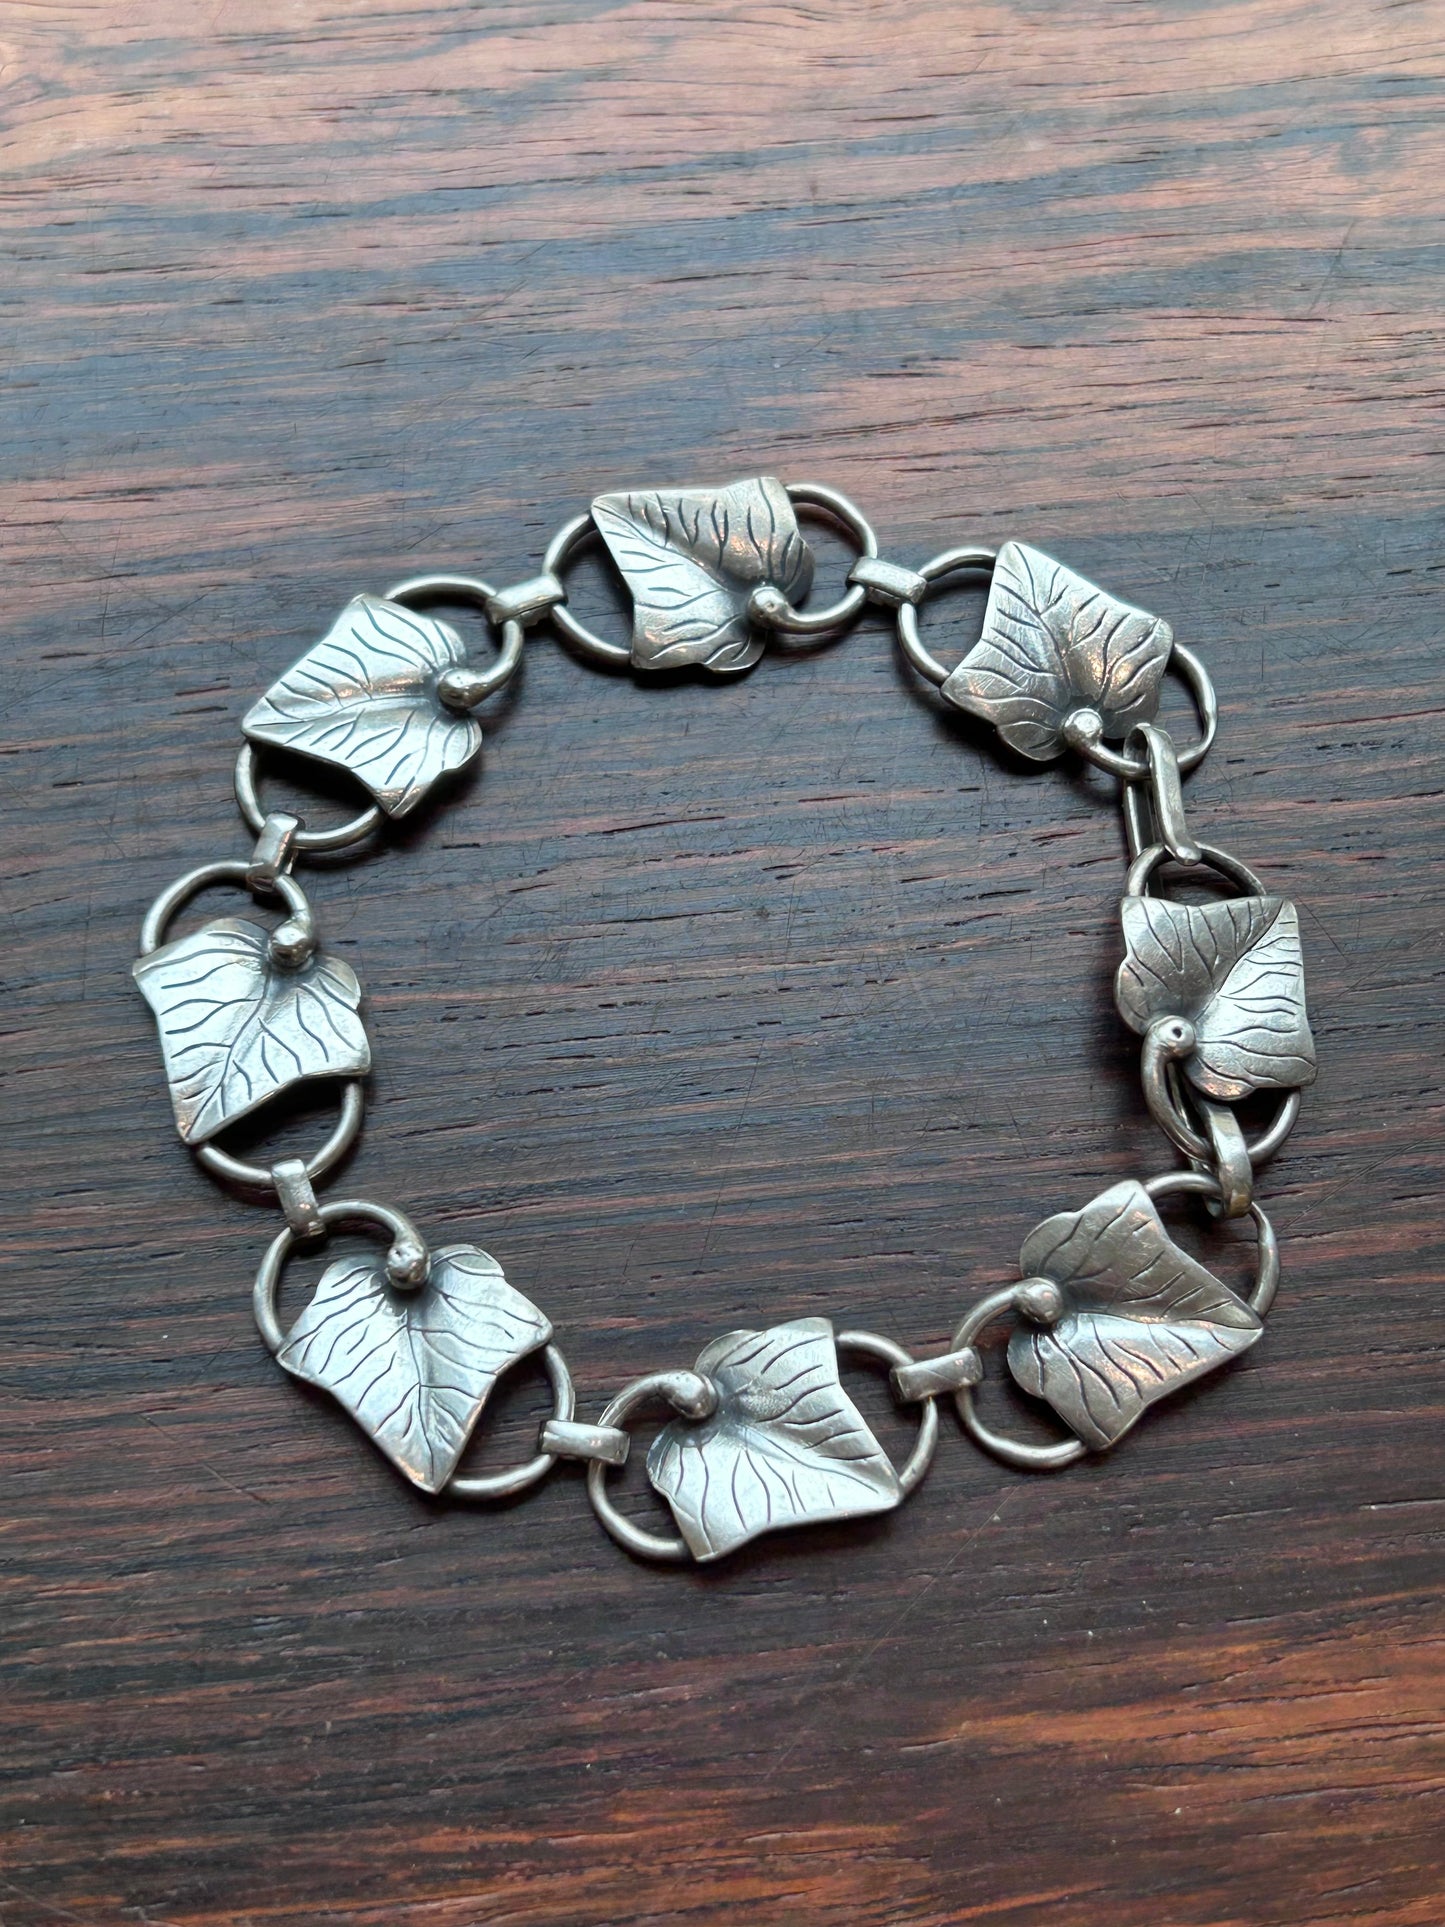 Silver bracelet with stylized leaves - Arvo Saarela